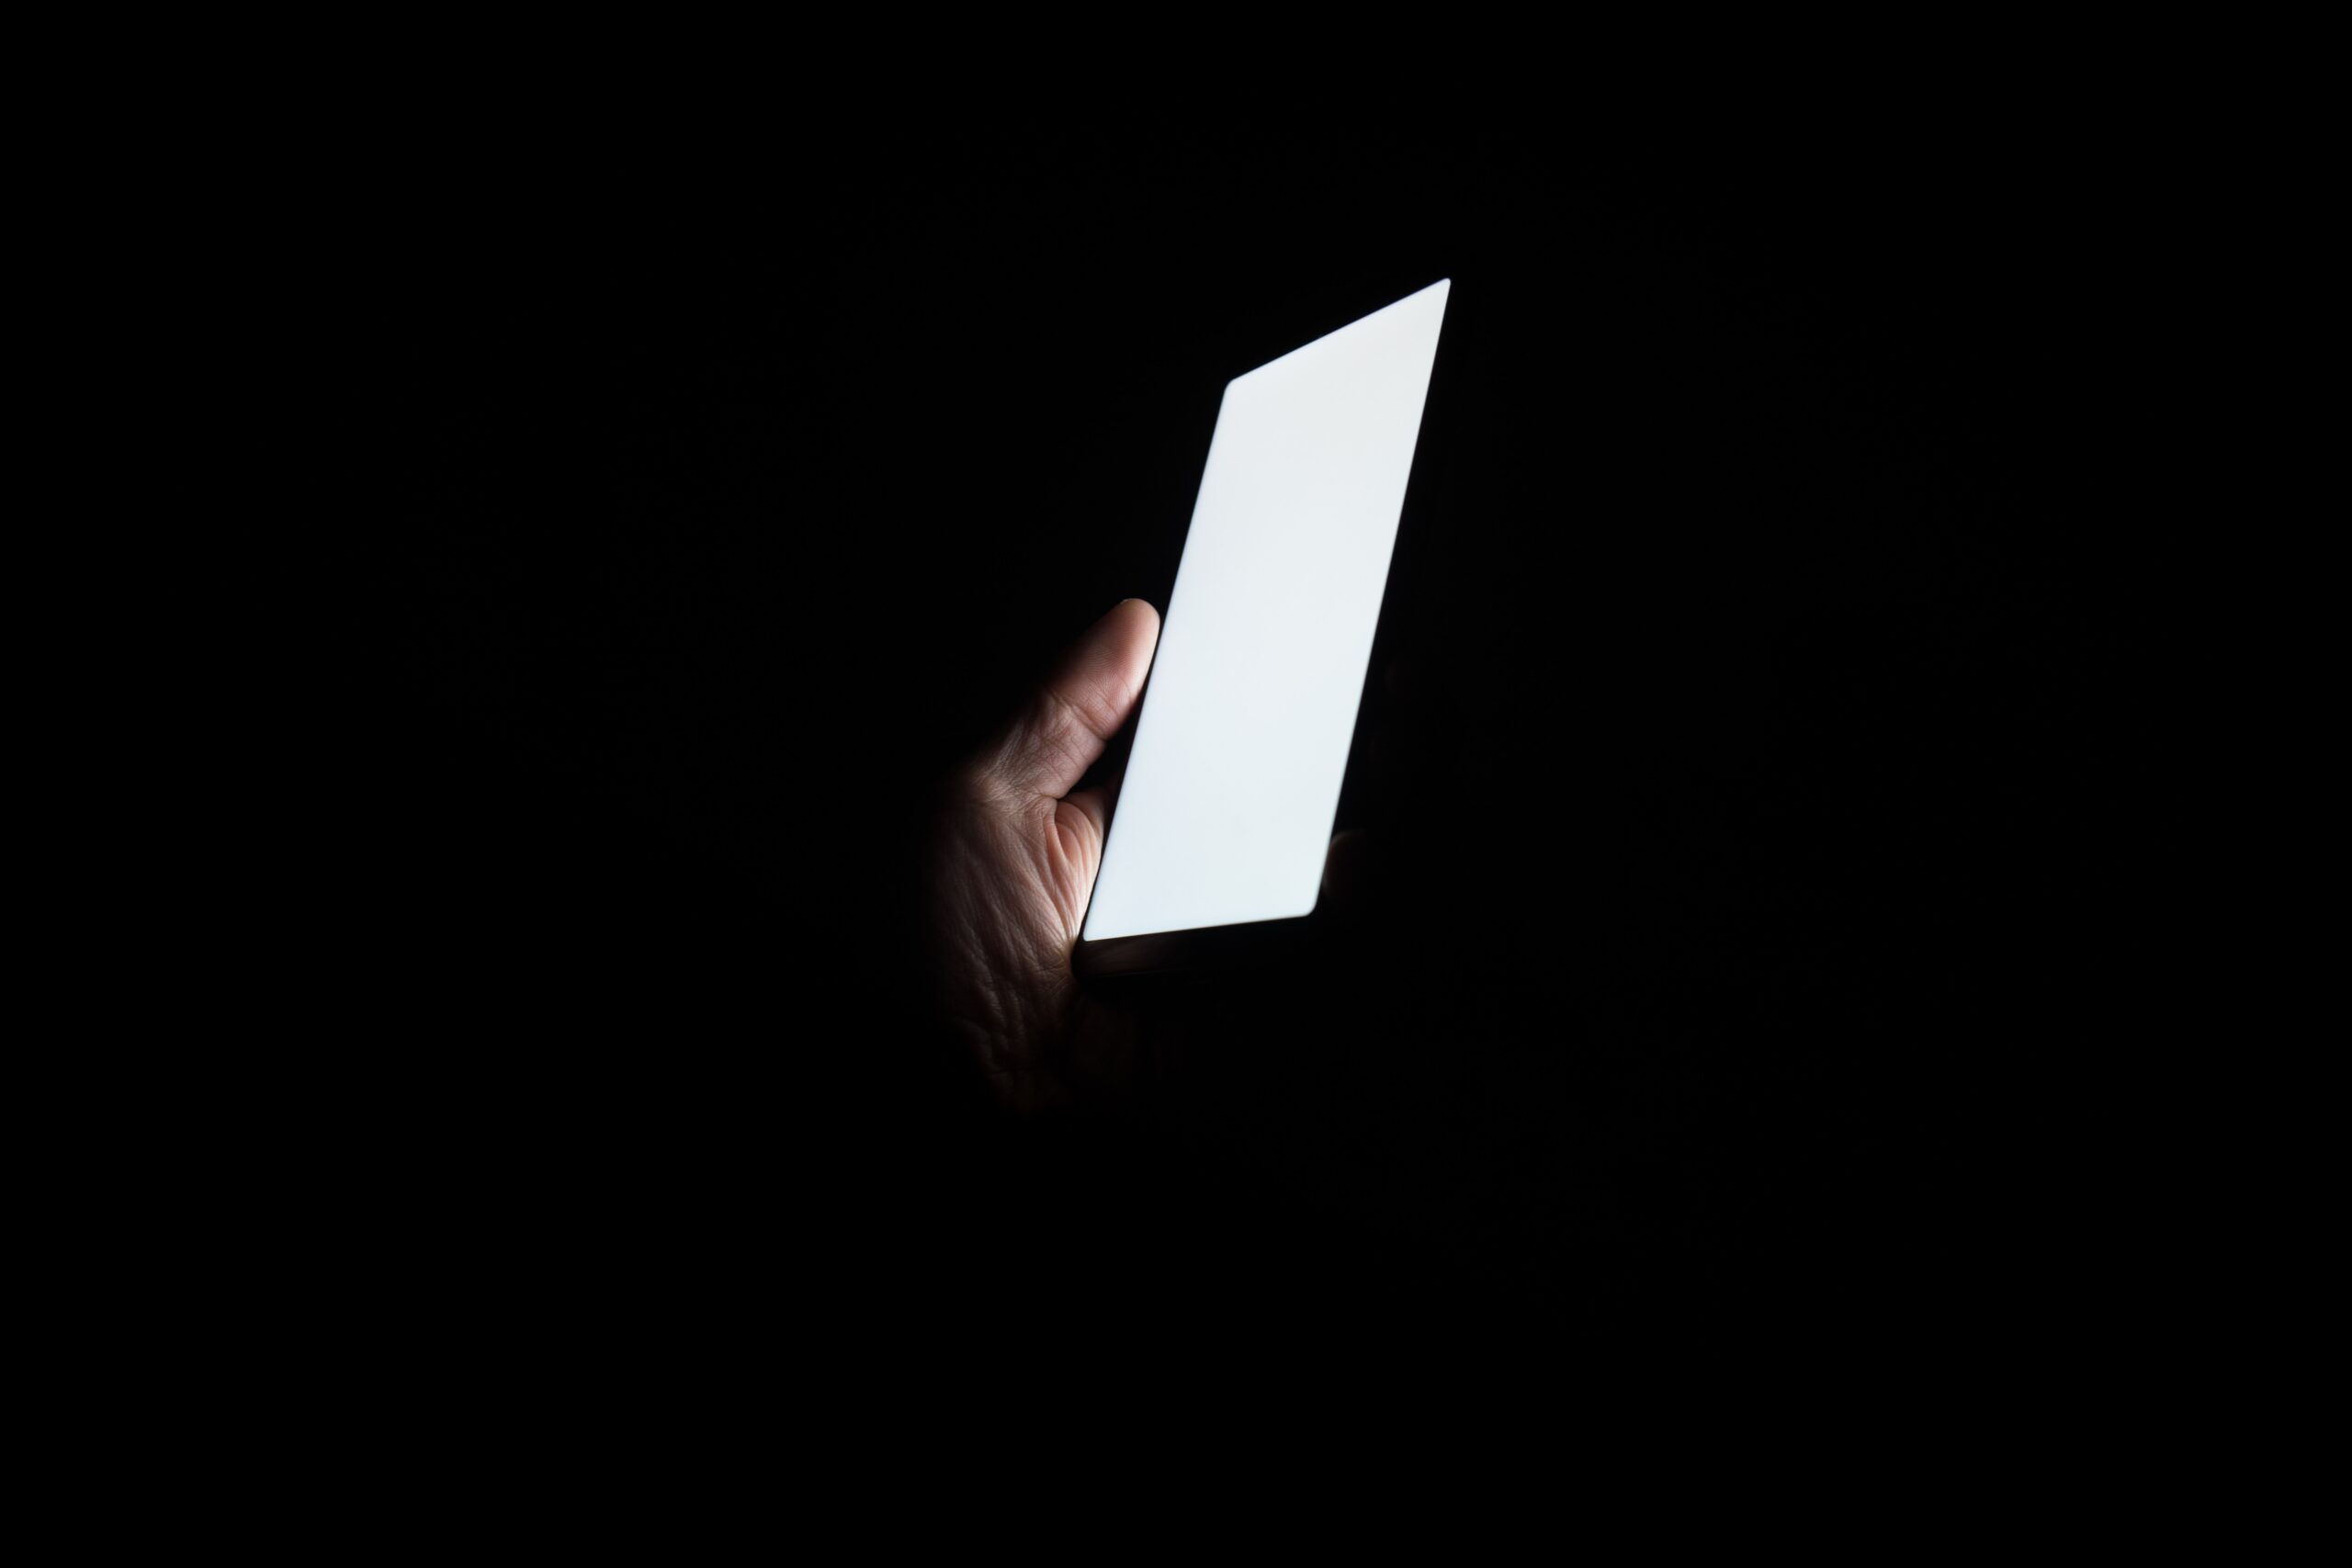 White phone screen held in dark room